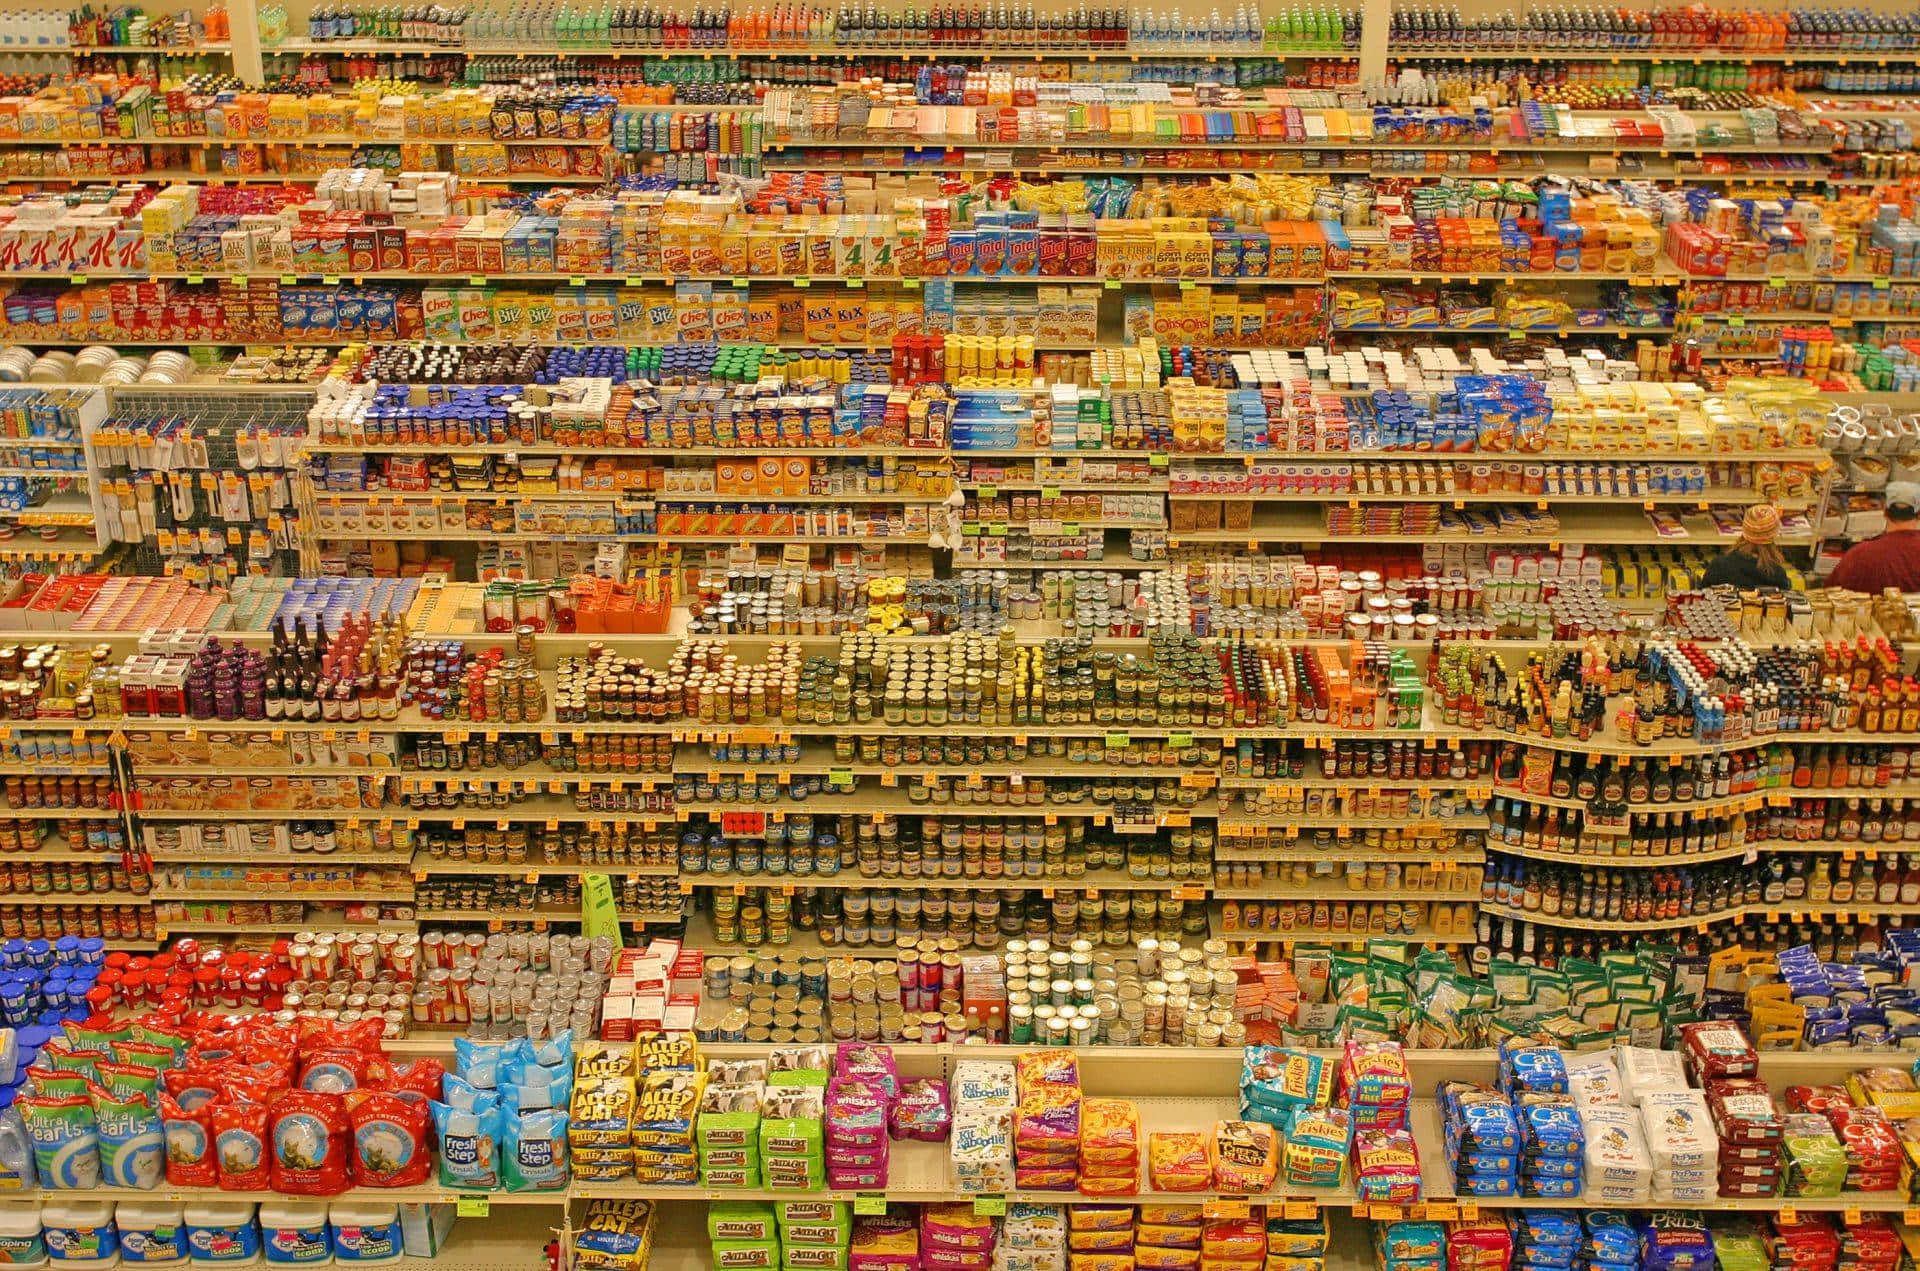 Endless possibilities of the supermarket floor